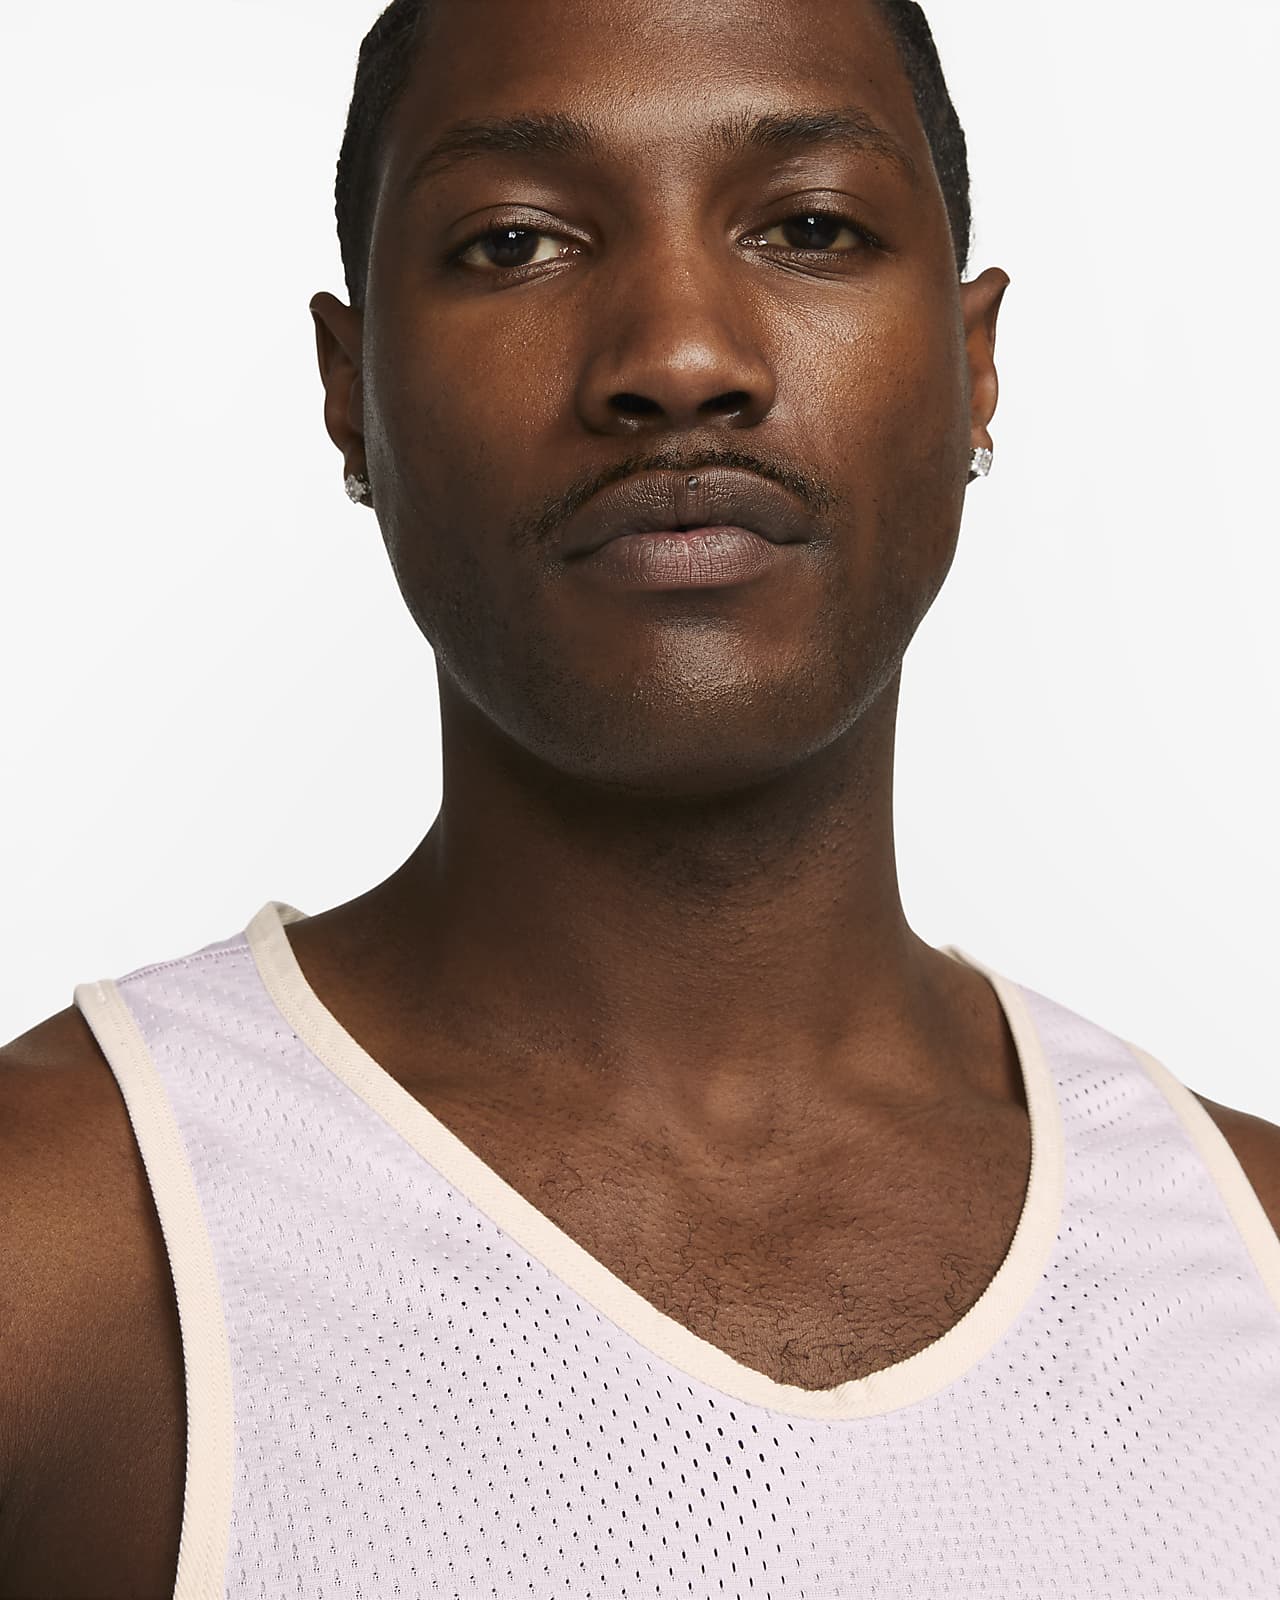 Kevin Durant Men's Nike Dri-FIT Mesh Basketball Jersey